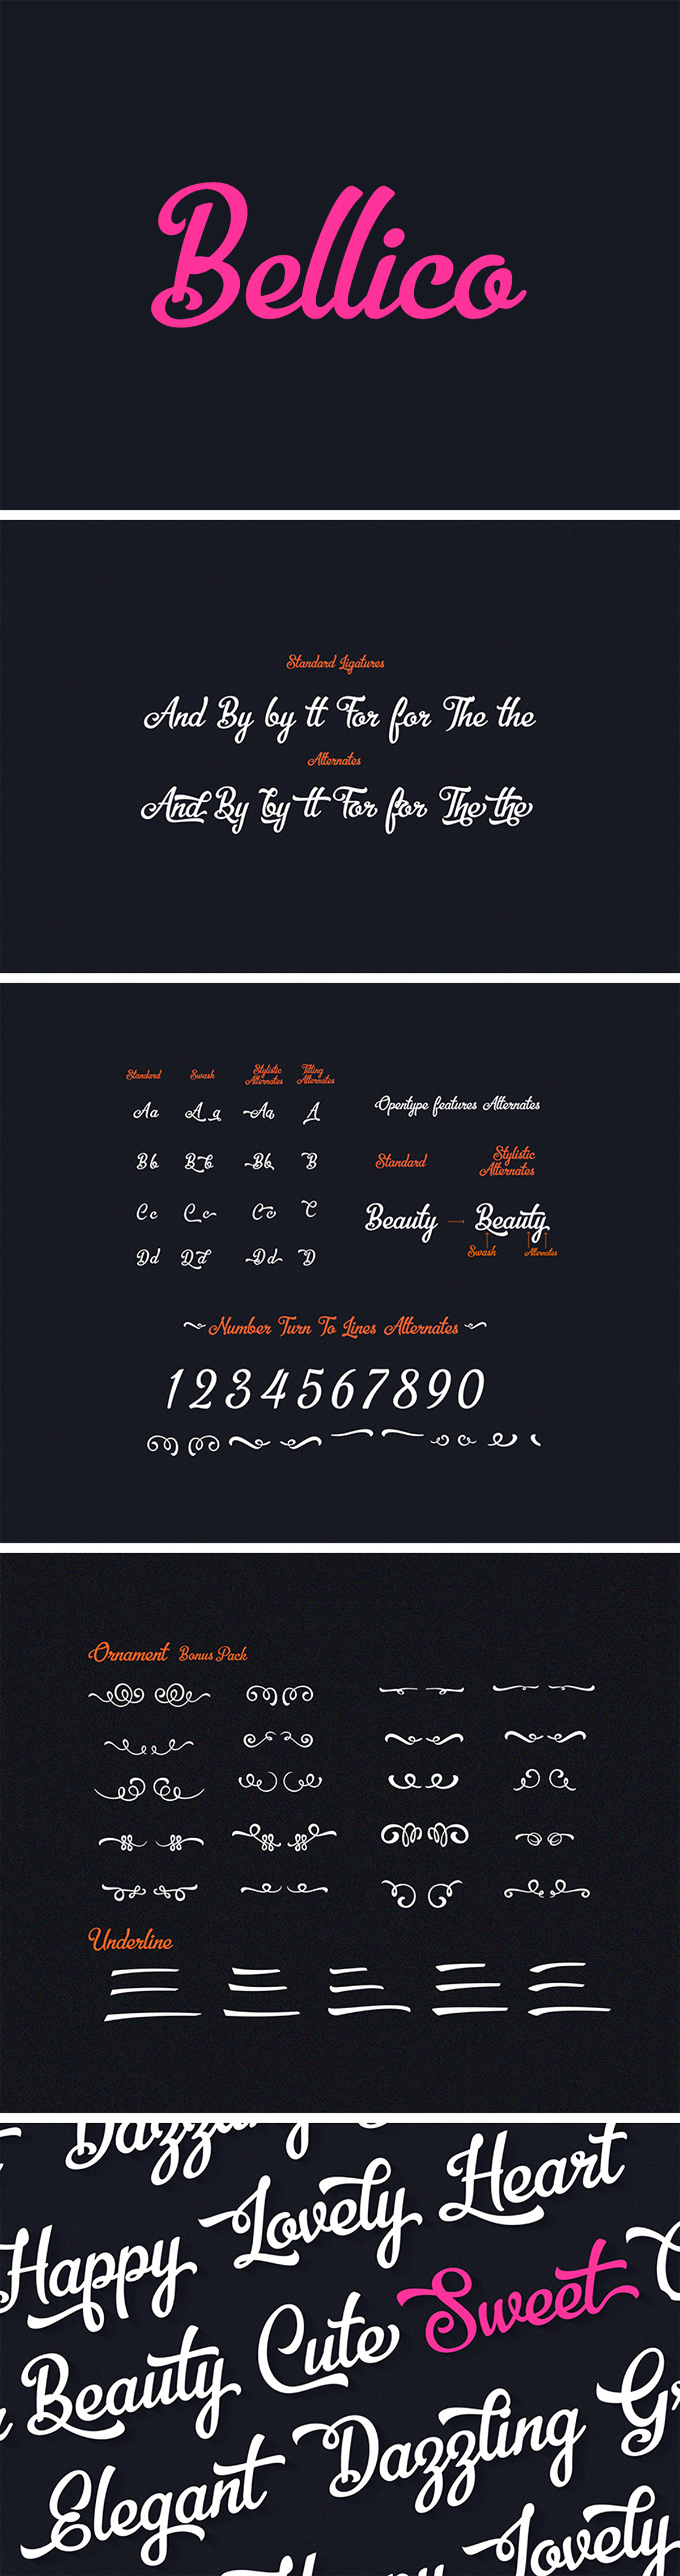 Free Font Bellico Typeface + Bonus Vectors